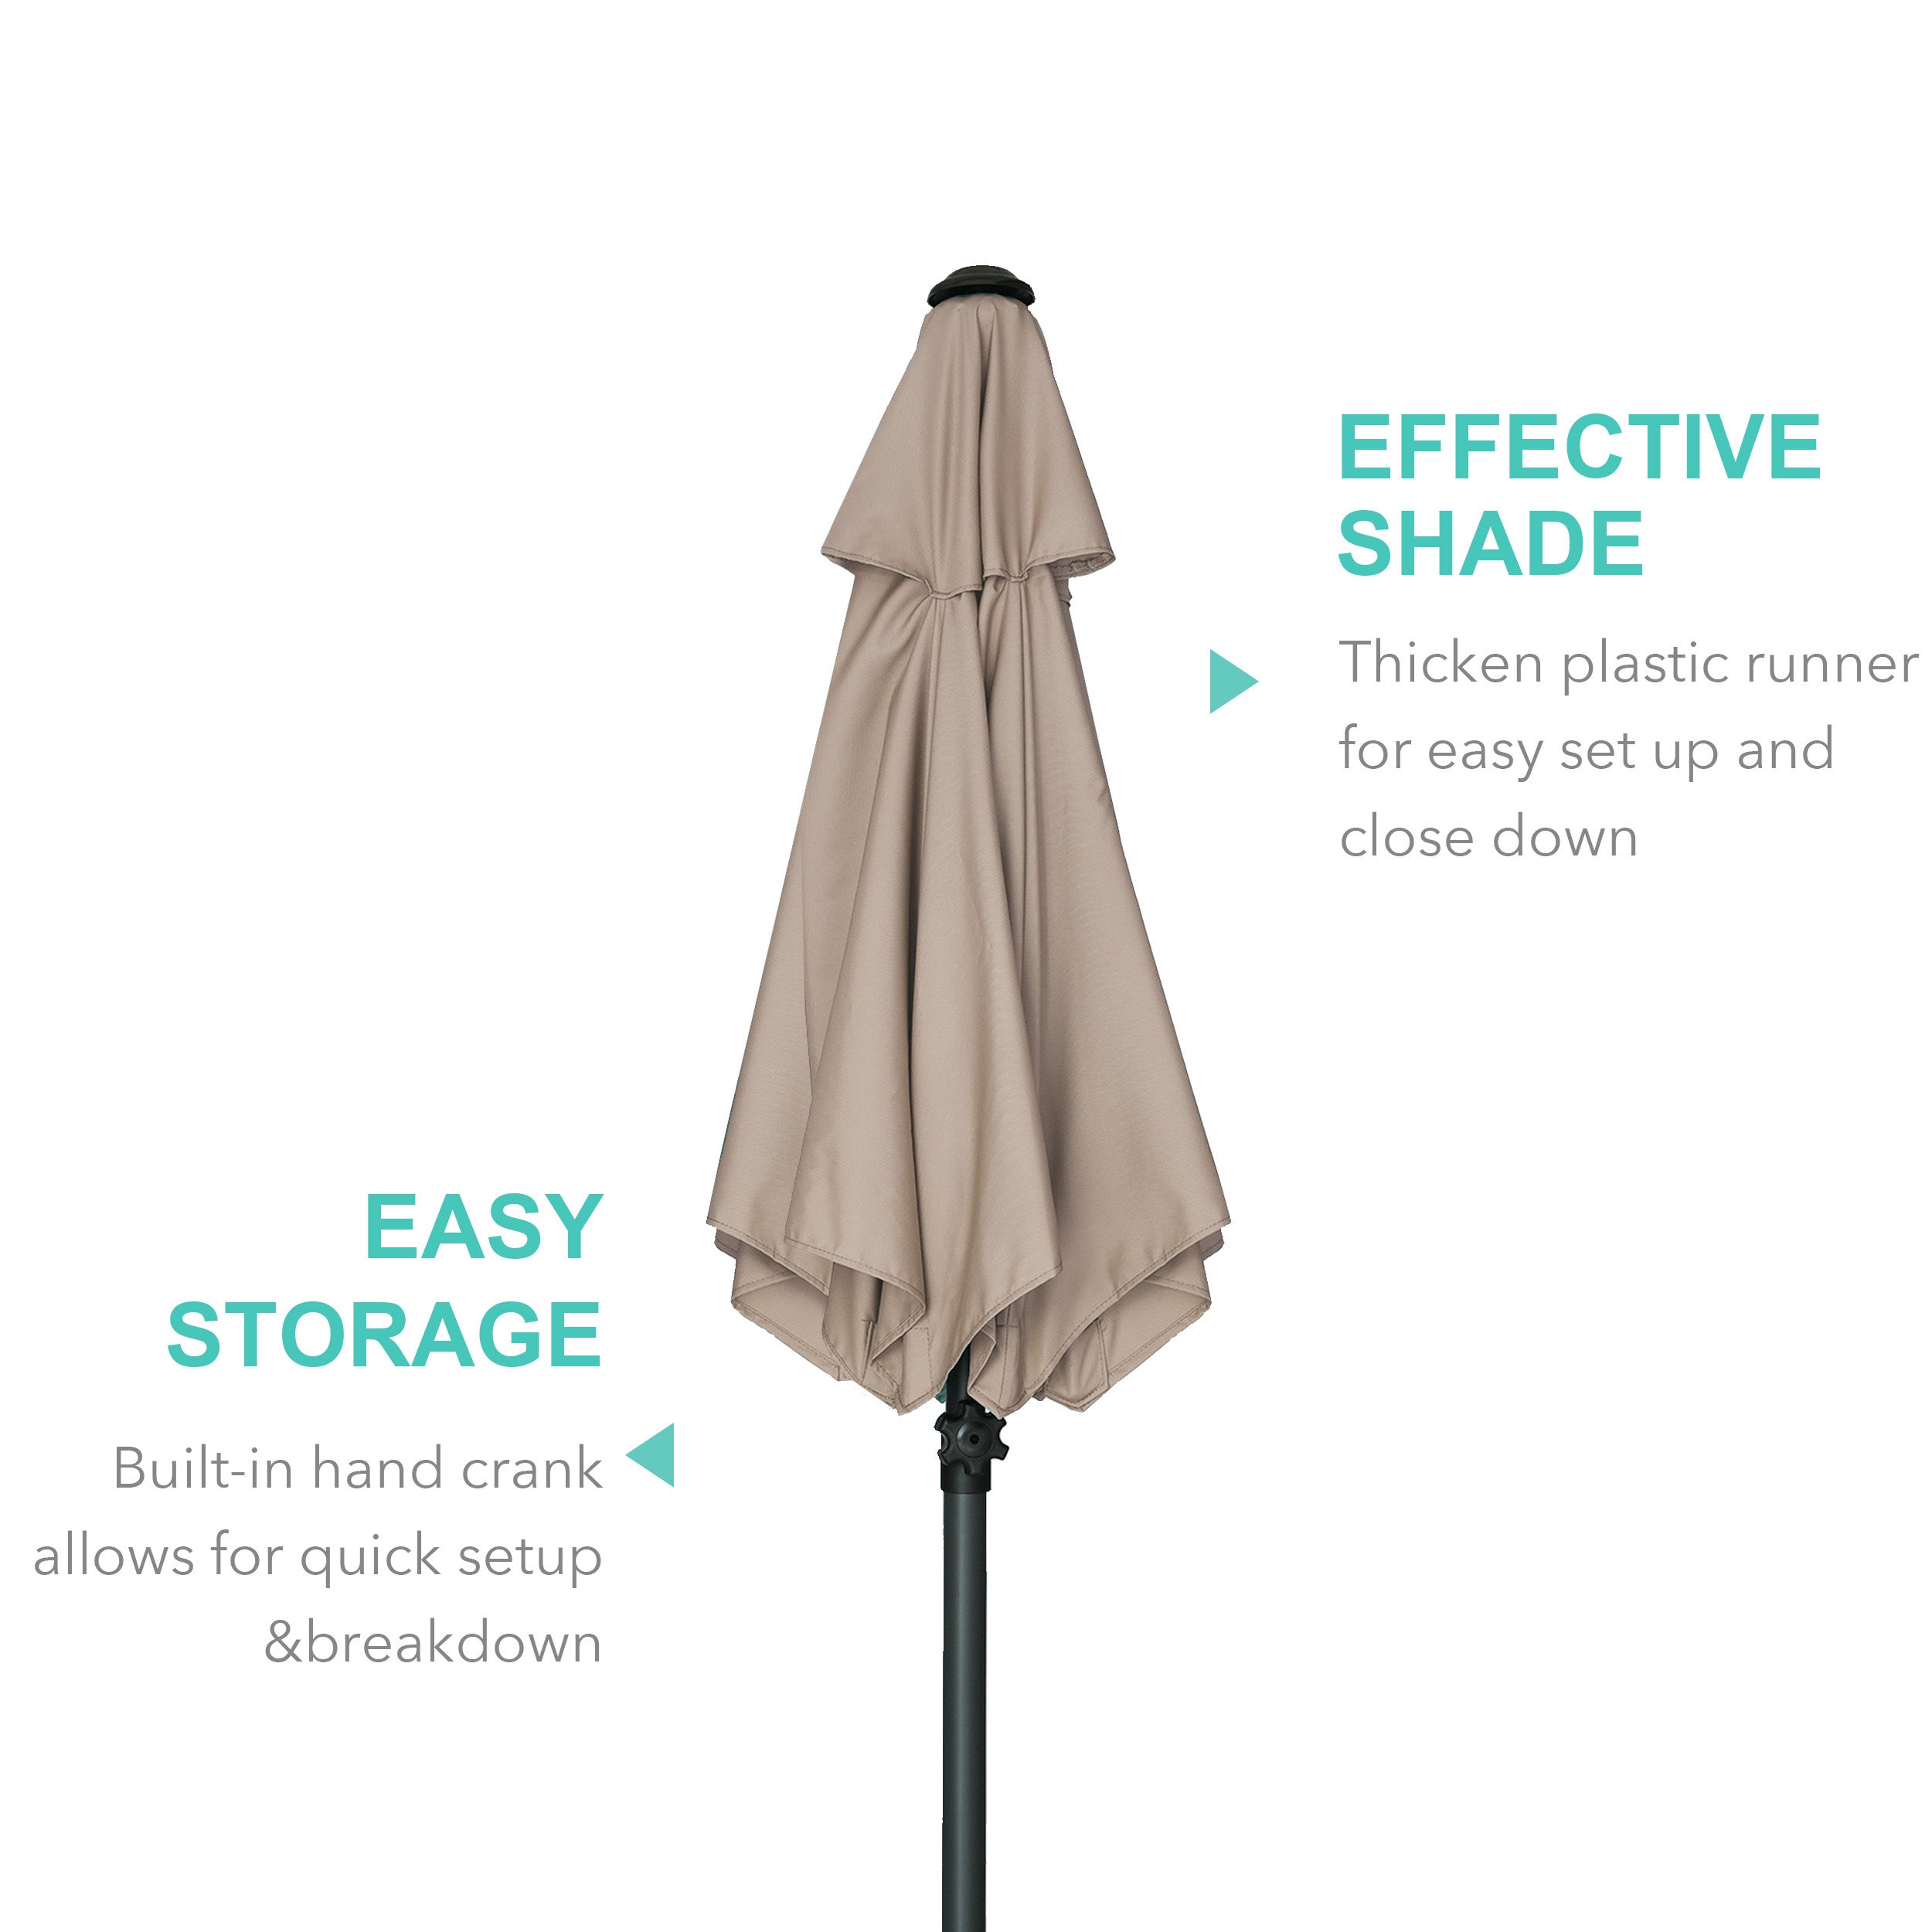 AMMSUN 6ft Patio Umbrella Outdoor Table Umbrellas with Push Button Tilt（Beige）